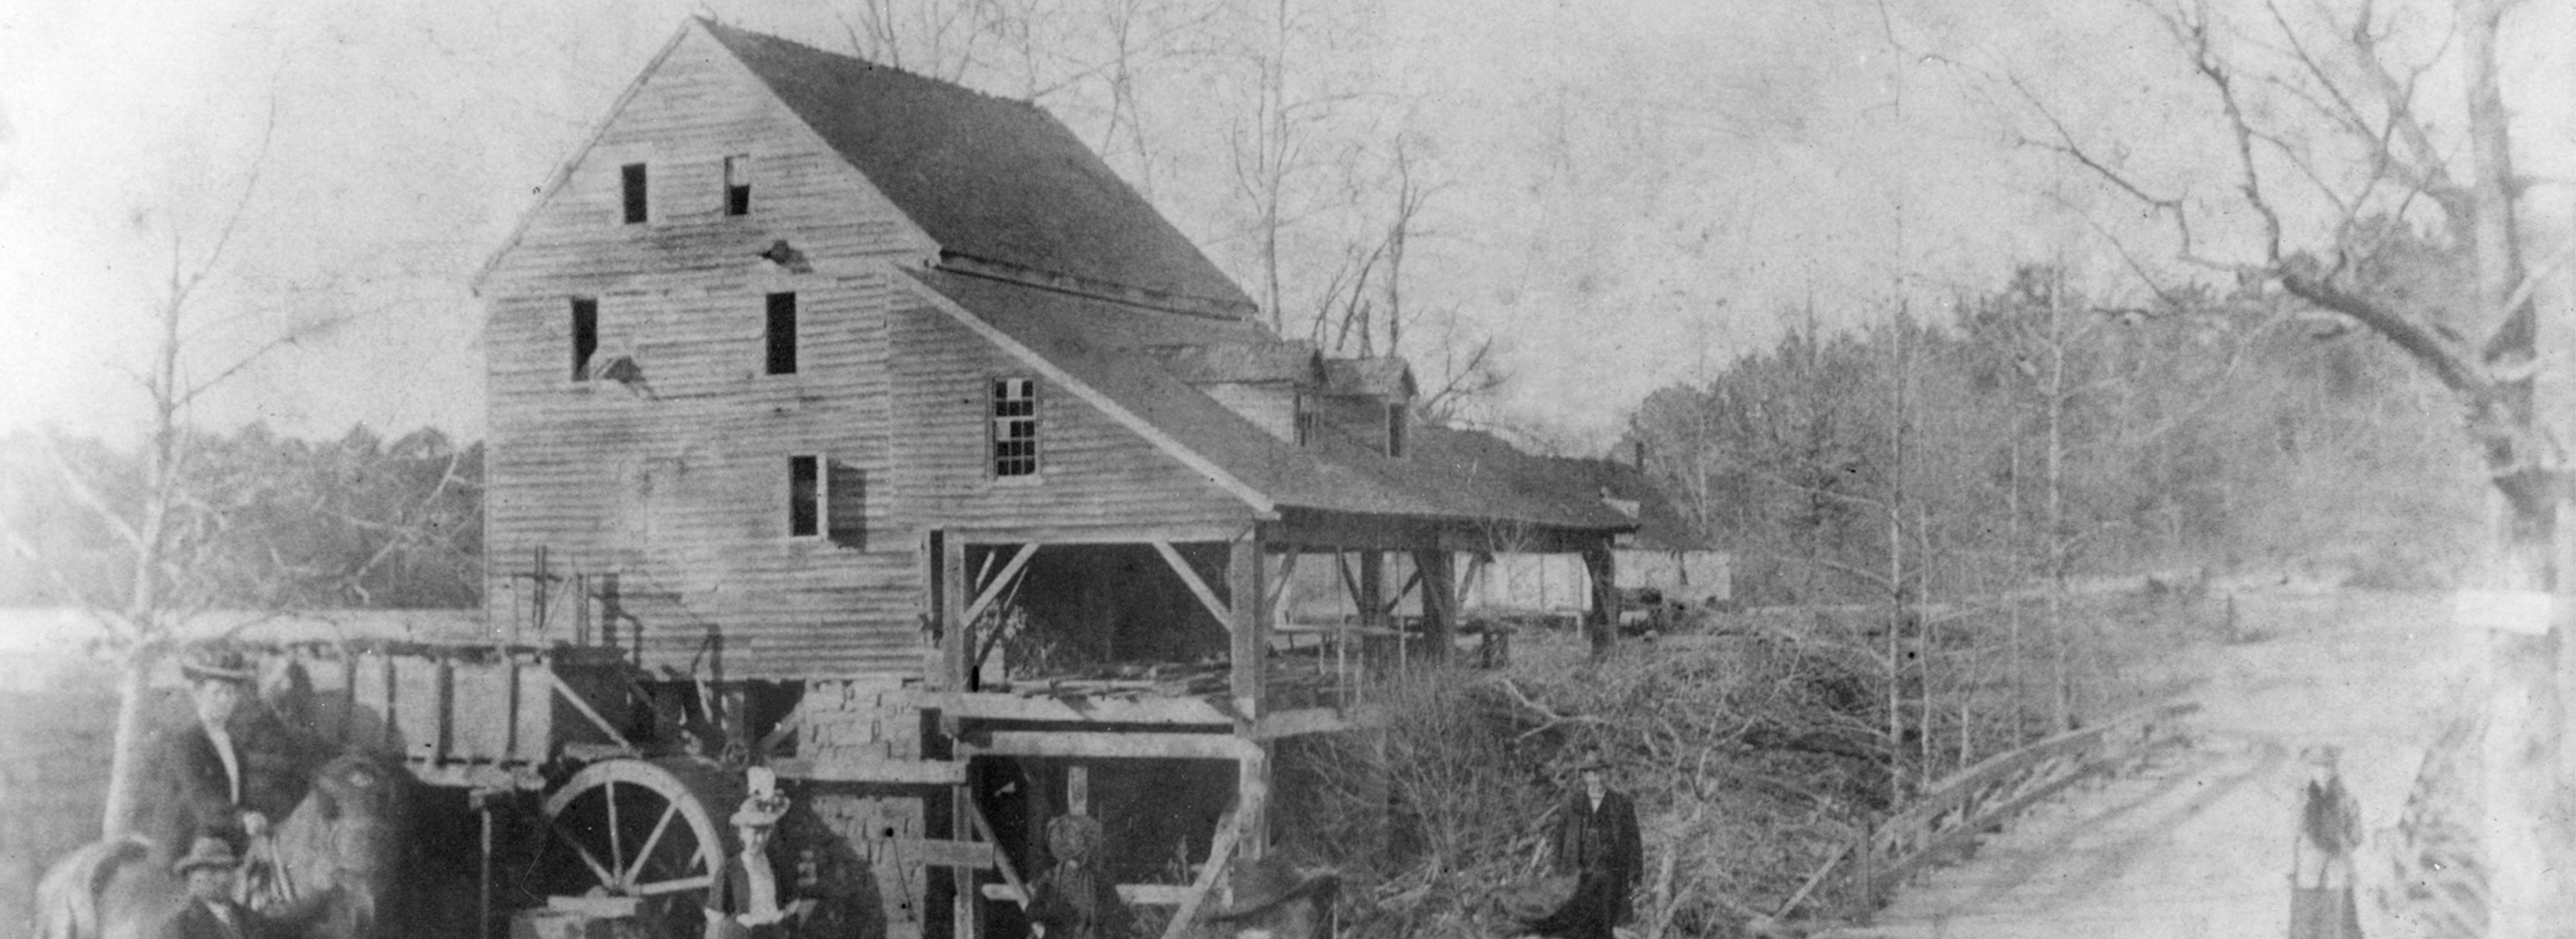 yates mill pond 1890s